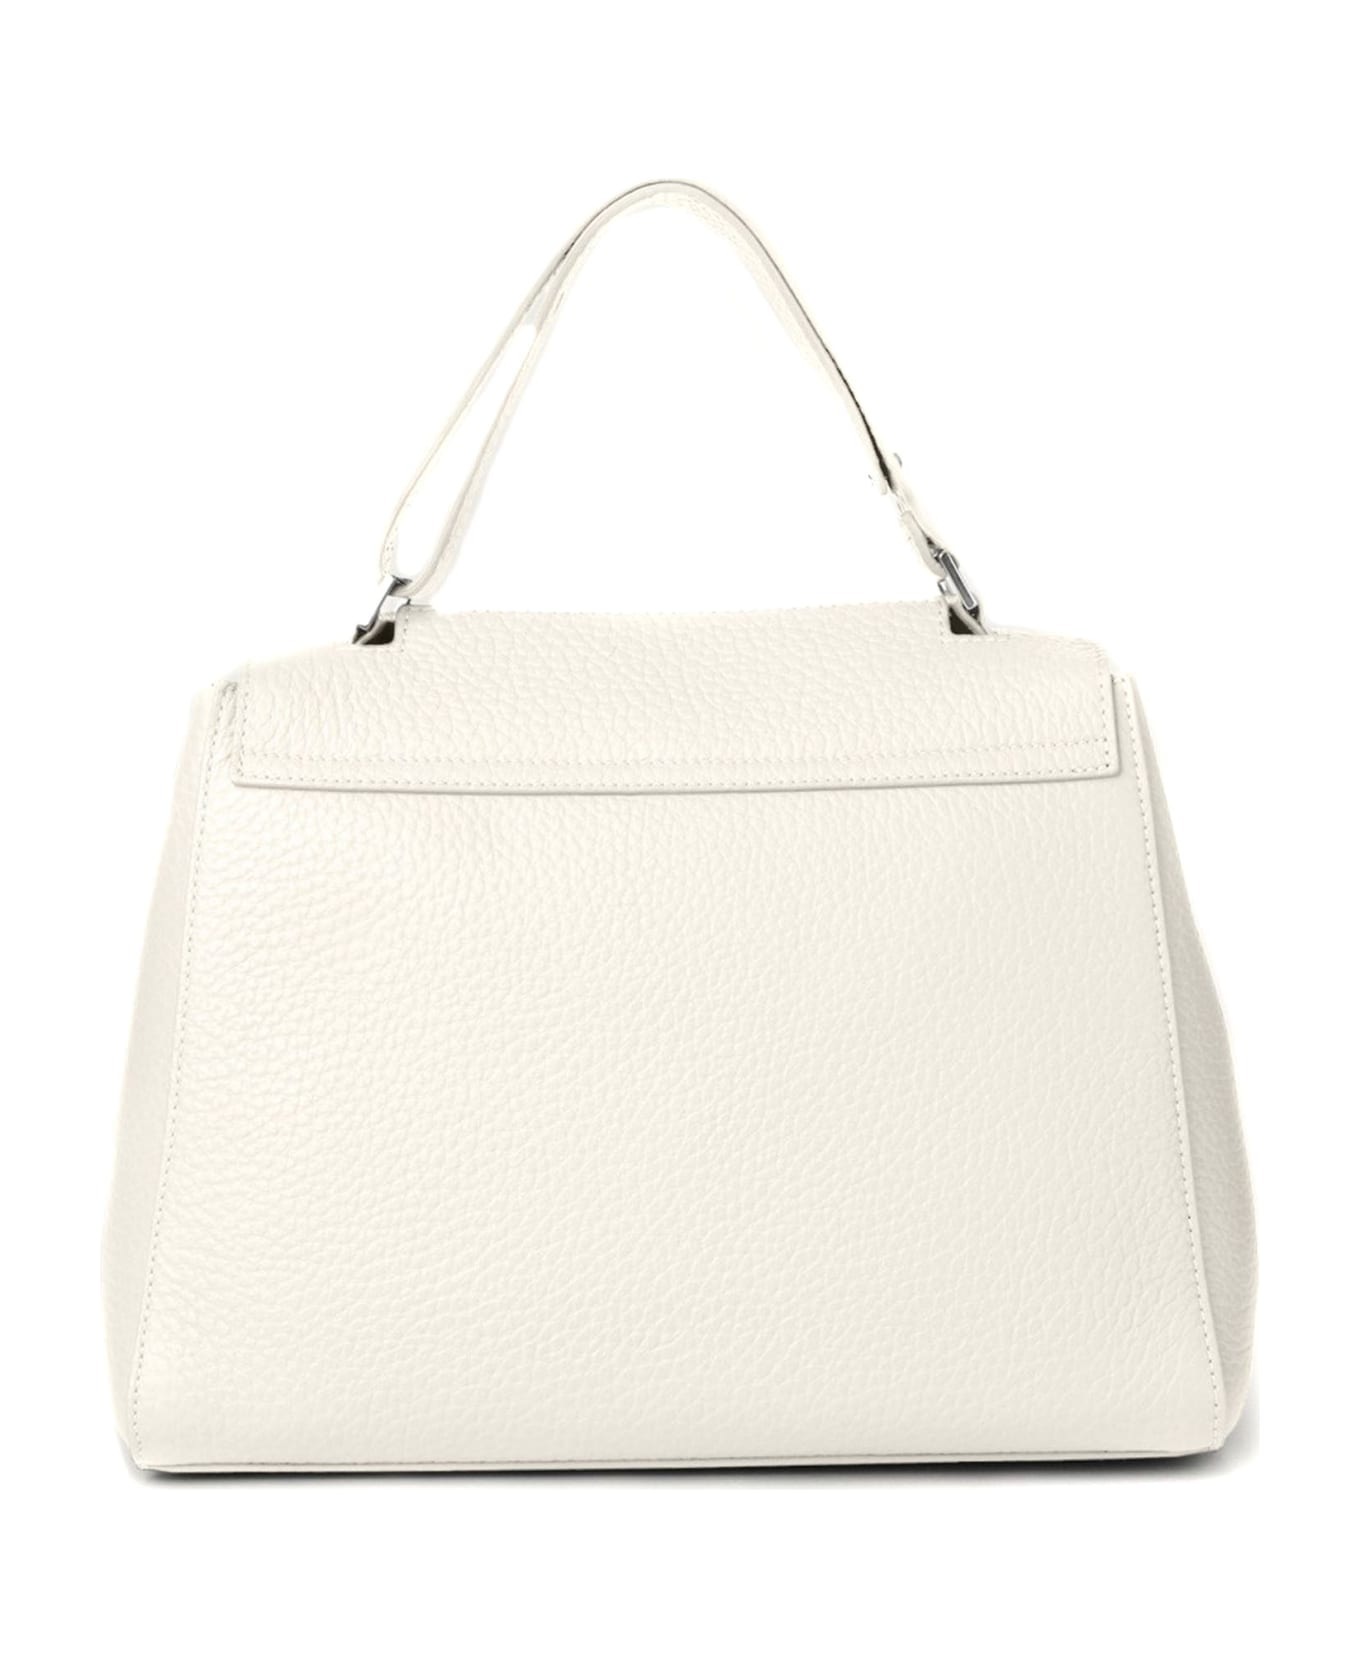 Orciani Sveva Soft Medium White Shoulder Bag | italist, ALWAYS LIKE A SALE